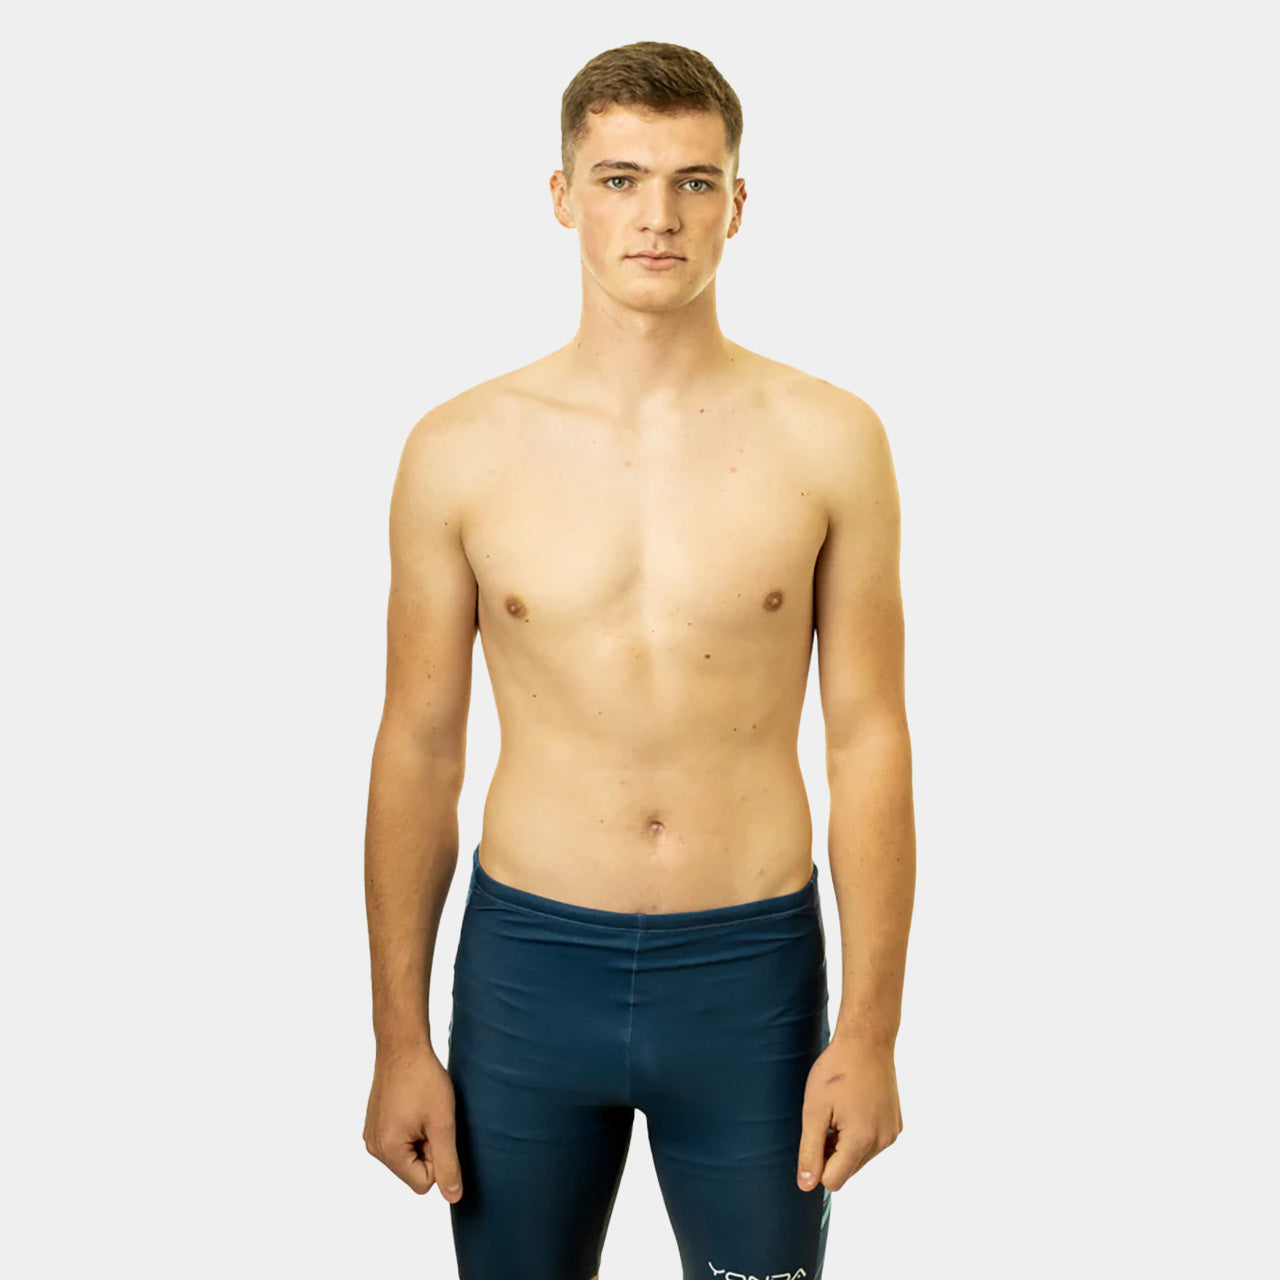 YONDA Men's Jammer Swim Shorts - Blue Abstract